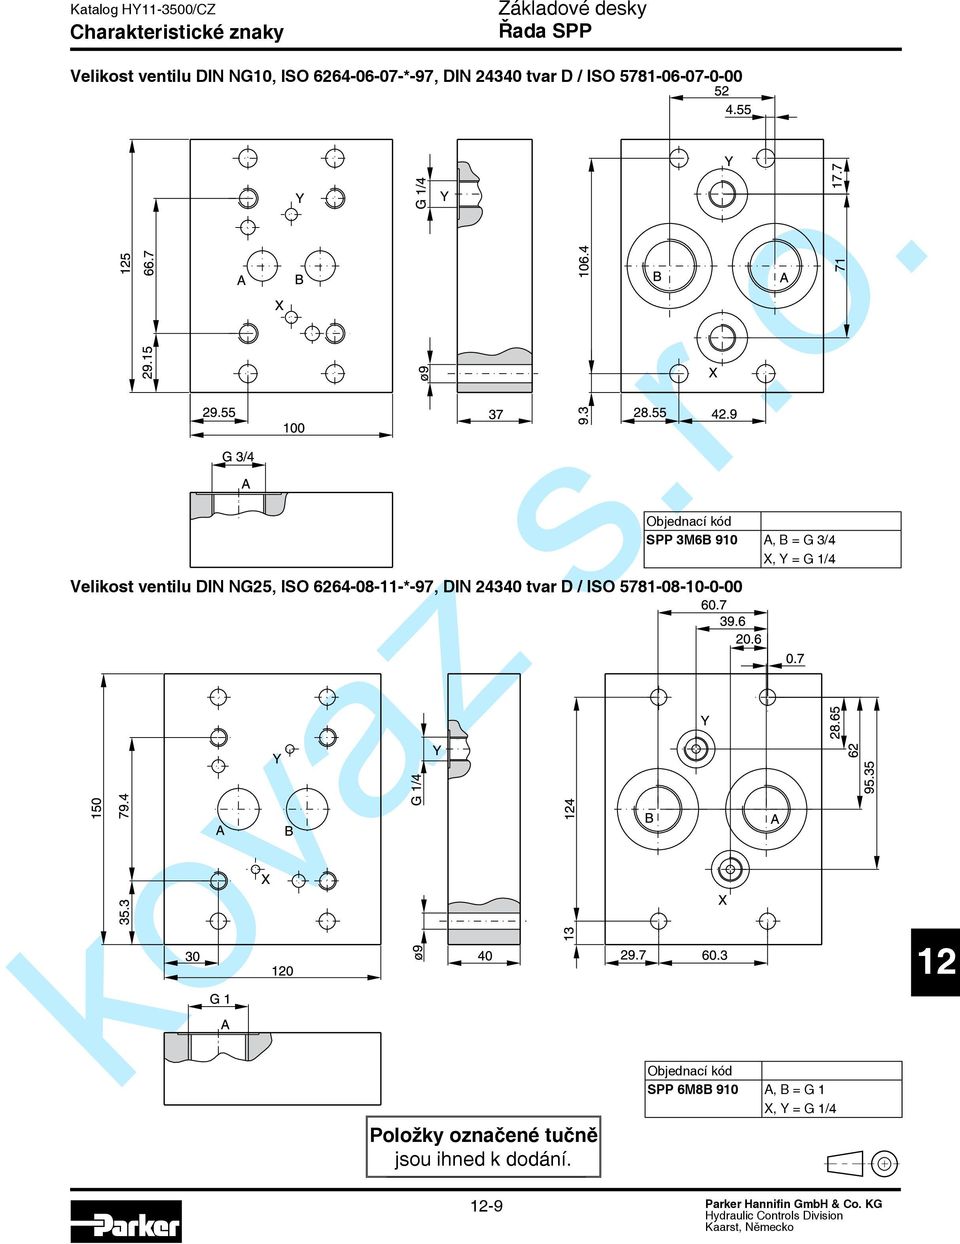 Velikost ventilu DIN NG25, ISO 6264-08-11-*-97, DIN 24340 tvar D / ISO 5781-08-10-0-00